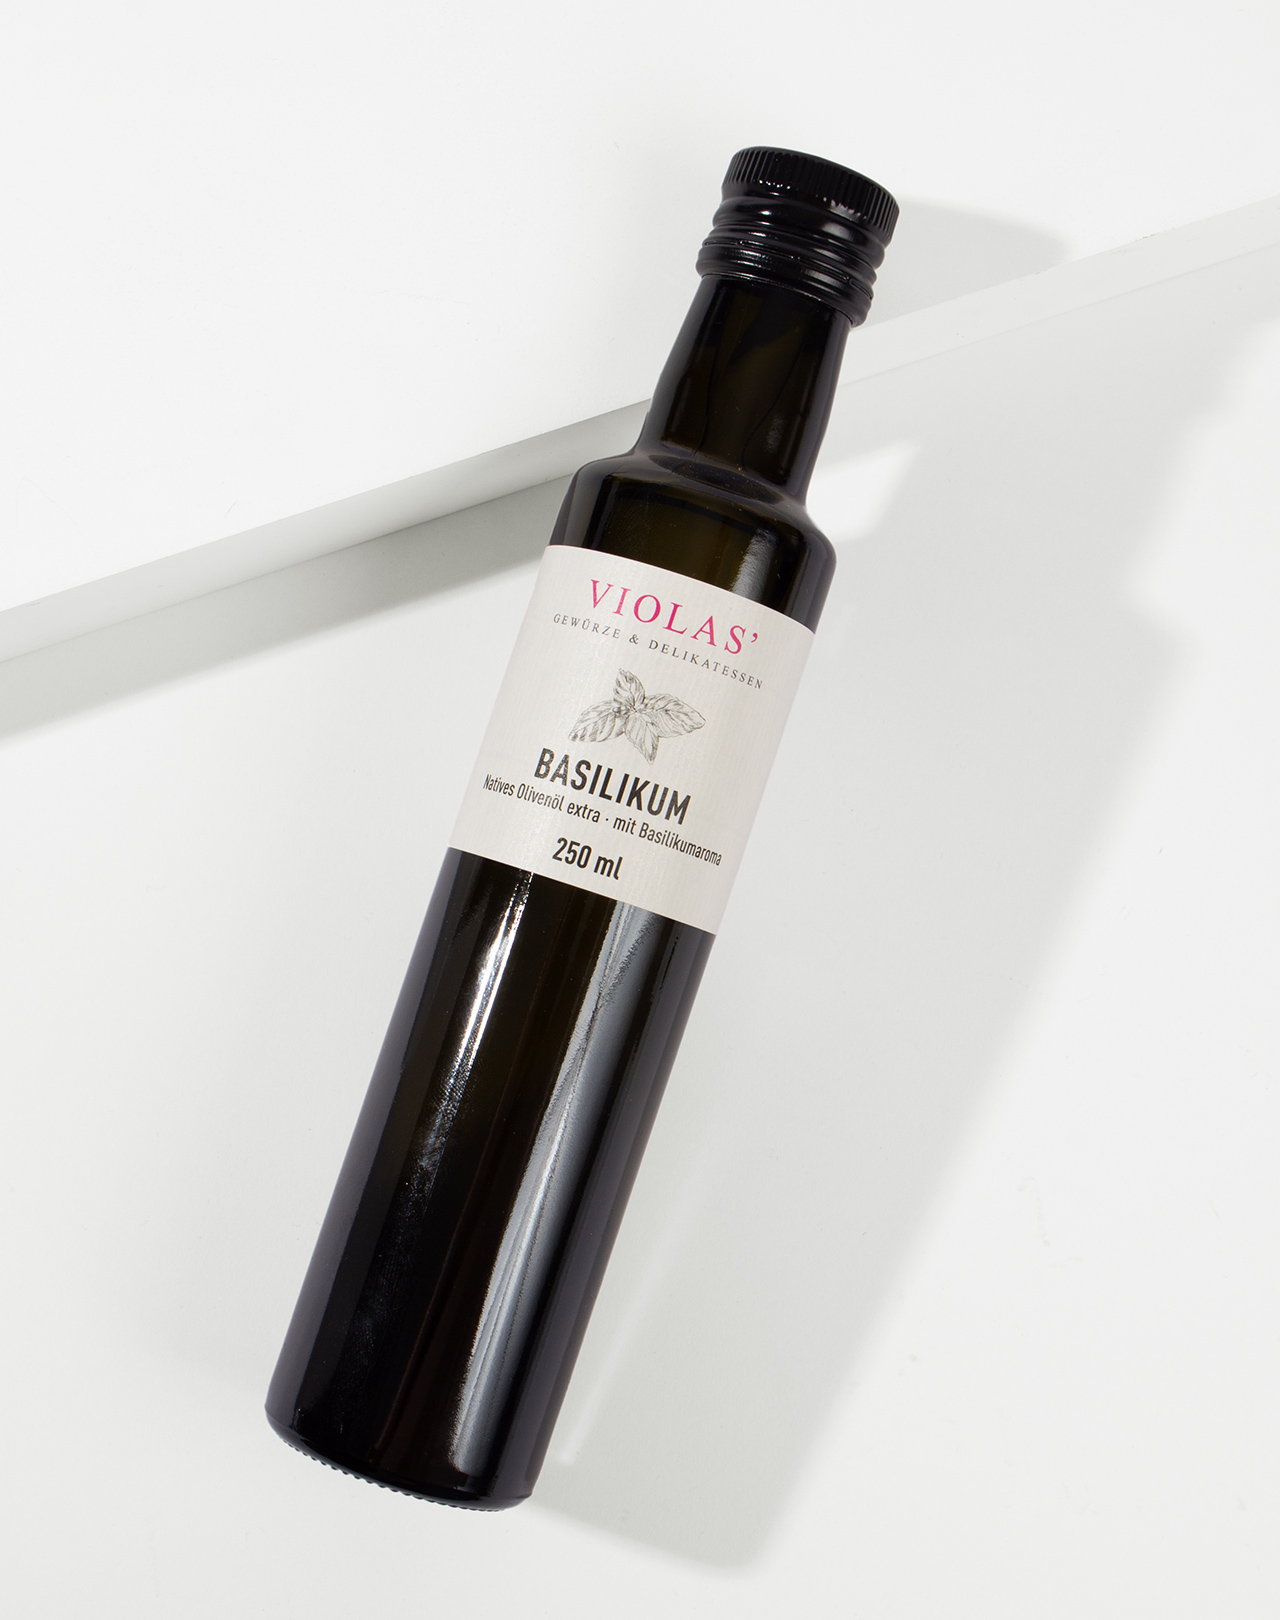 VIOLAS’ Olivenöl »Basilikum«